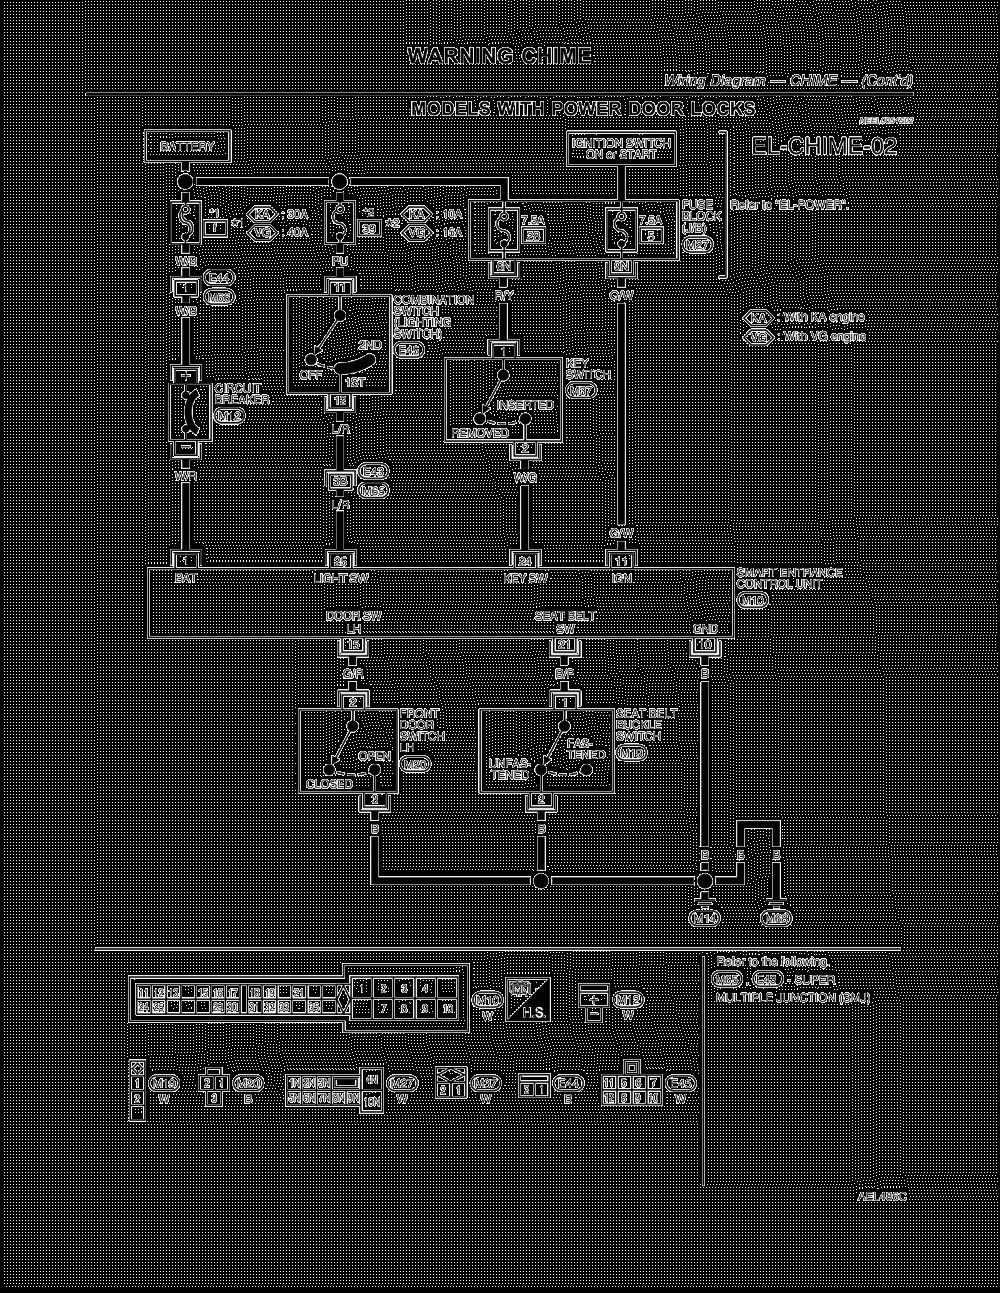 metra wiring diagram chime auto electrical wiring diagram